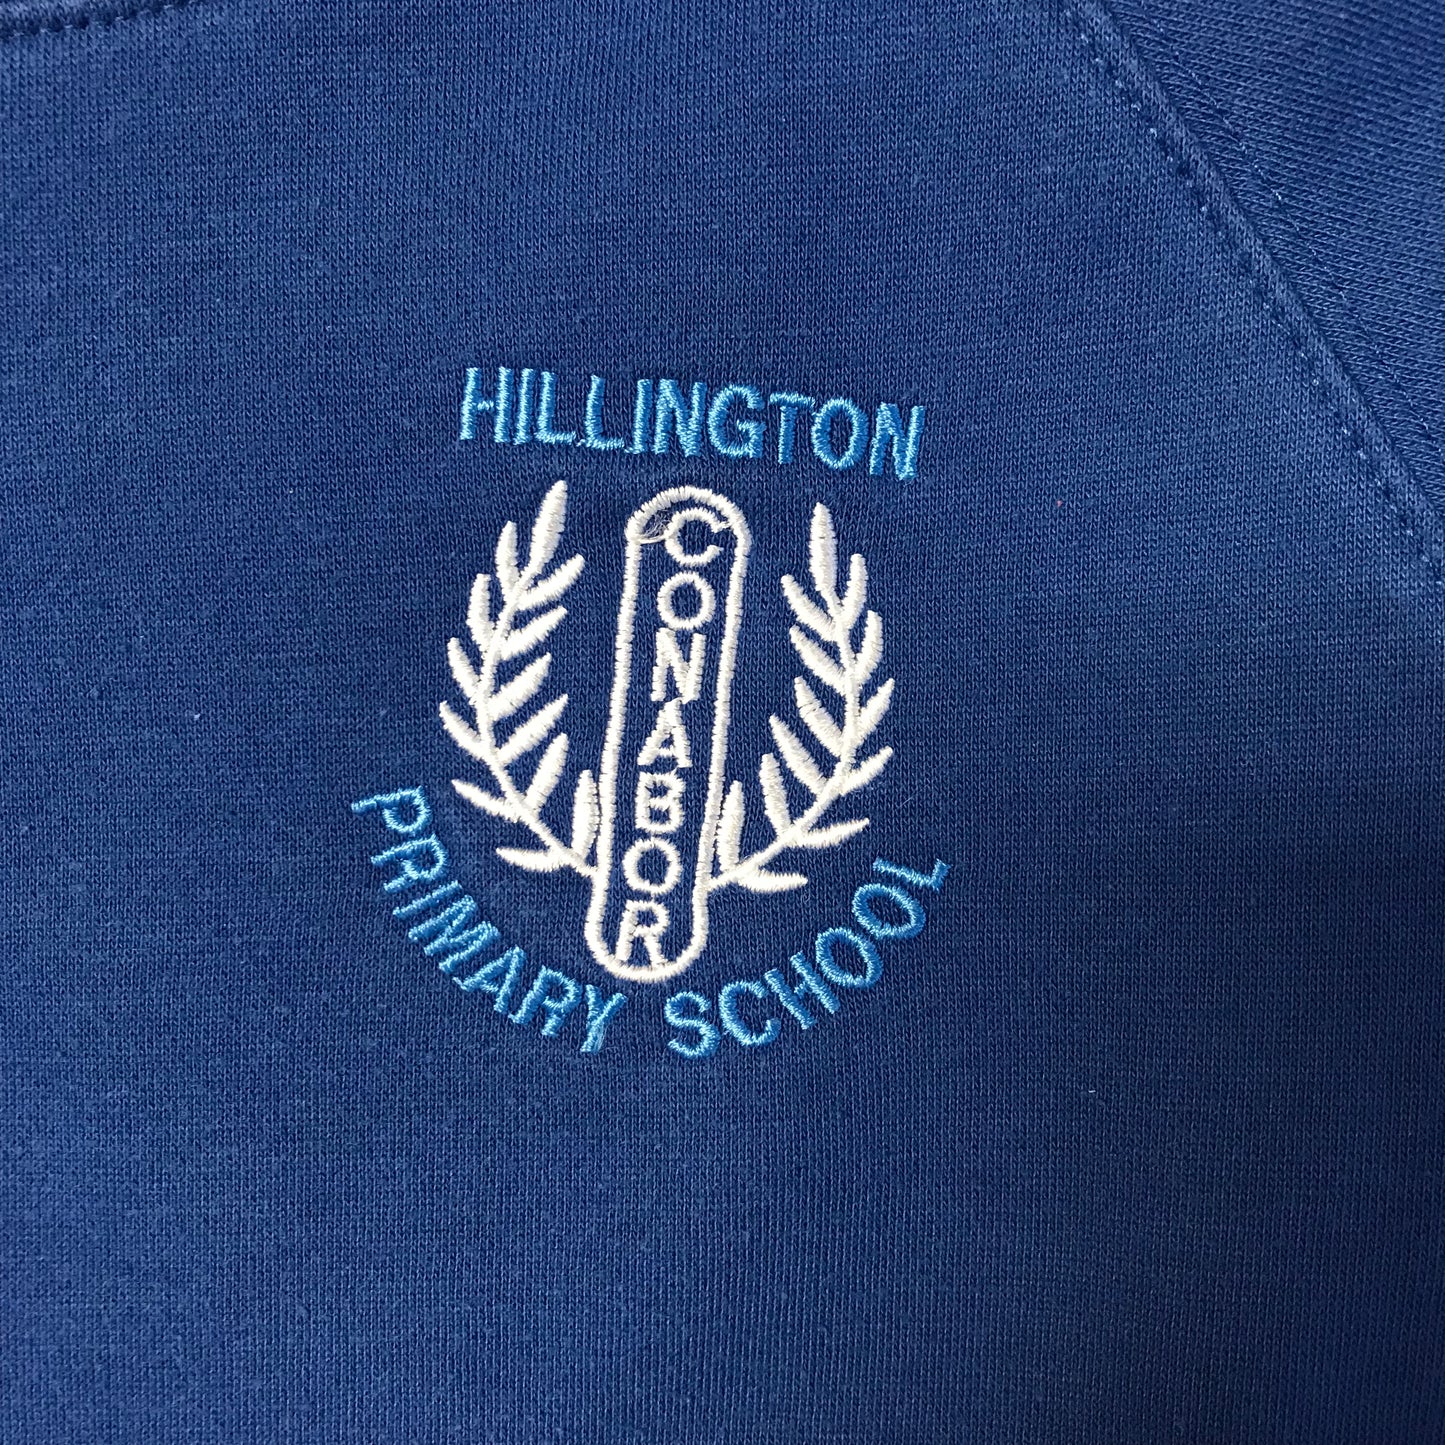 Hillington Primary Royal Blue Crewneck Jersey